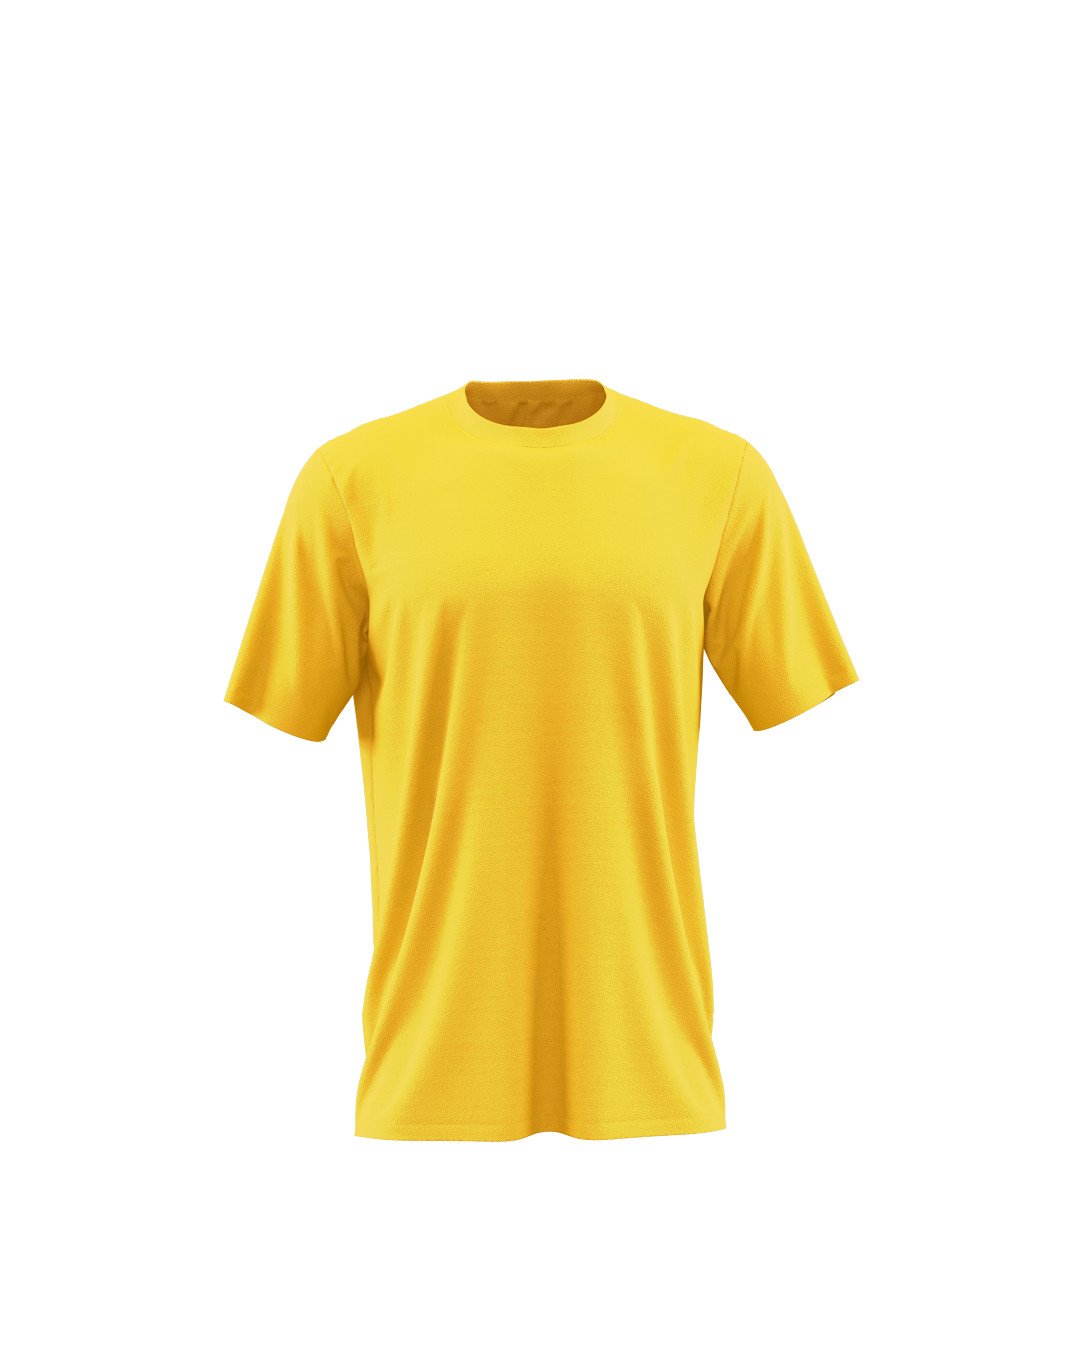 Plain Round Neck Bio-washed Super Combed Yellow Cotton T-Shirt